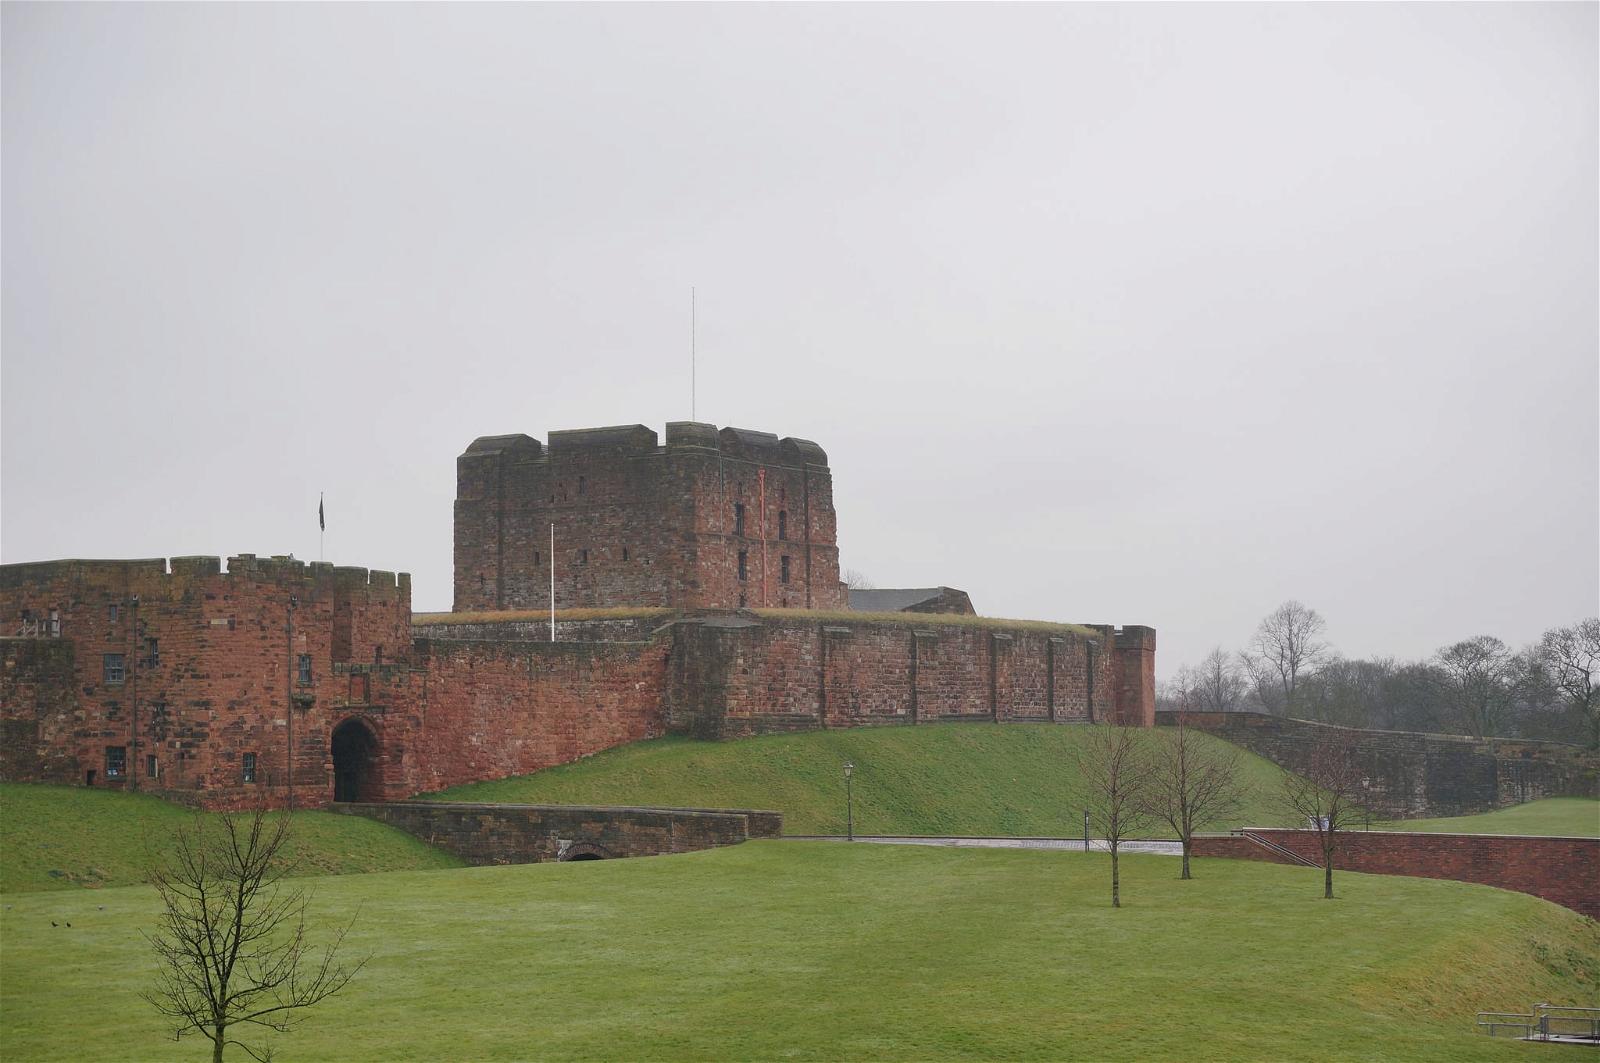 Image de Carlisle Castle. castle carlisle file:md5sum=908c8bc5047d86c9d51cb7e162e7d1b4 file:sha1sig=beb354c67860ebbfa863e4076d045cbb567bb0f4